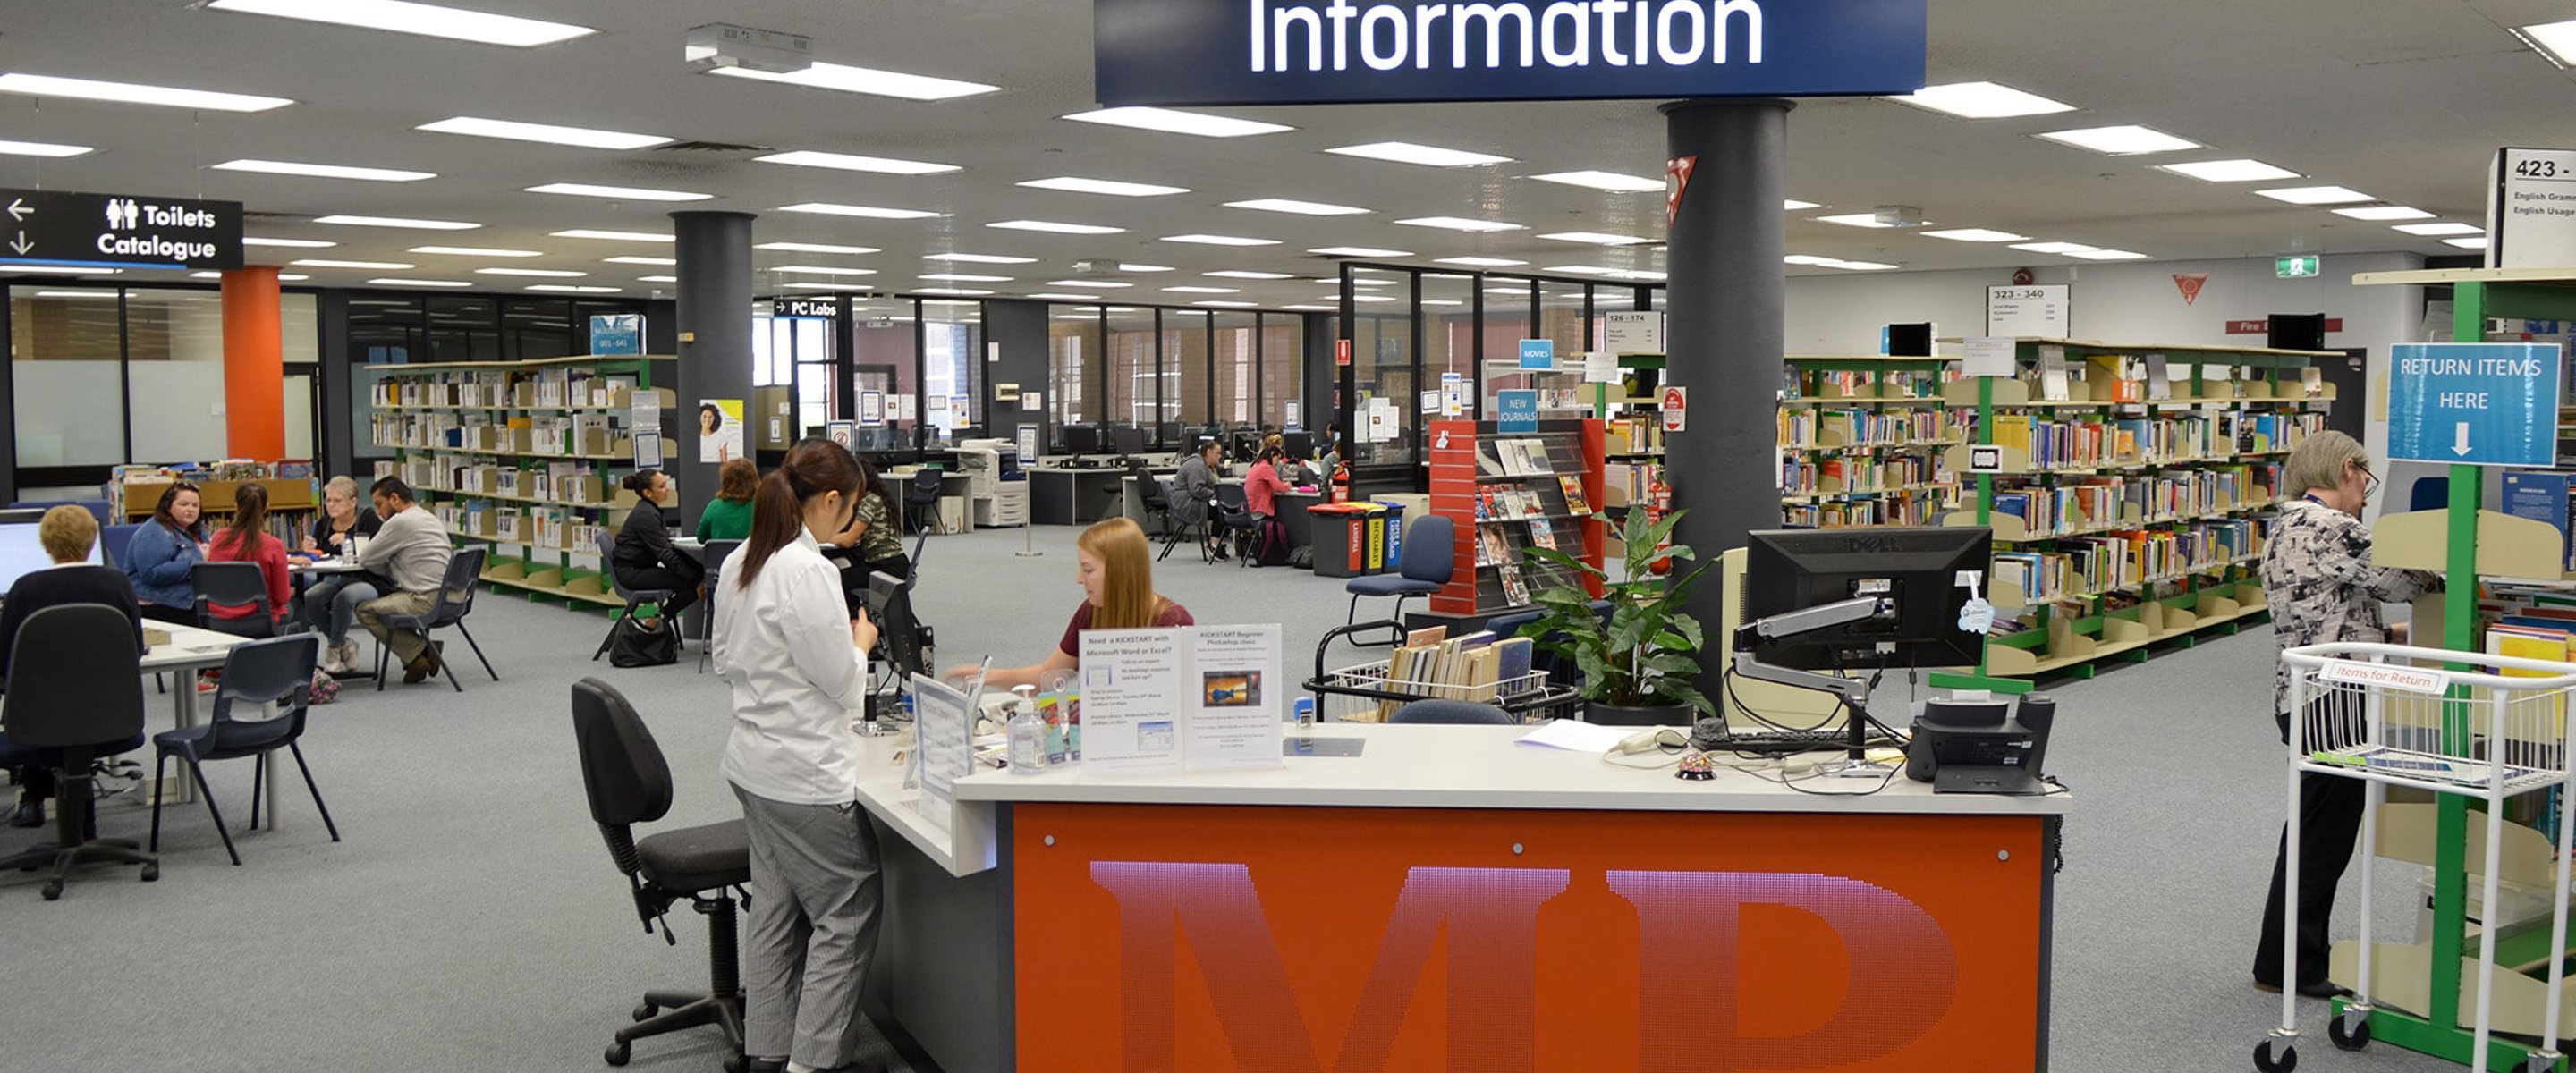 Information desk at Melbourne Polytechnic's Preston Library